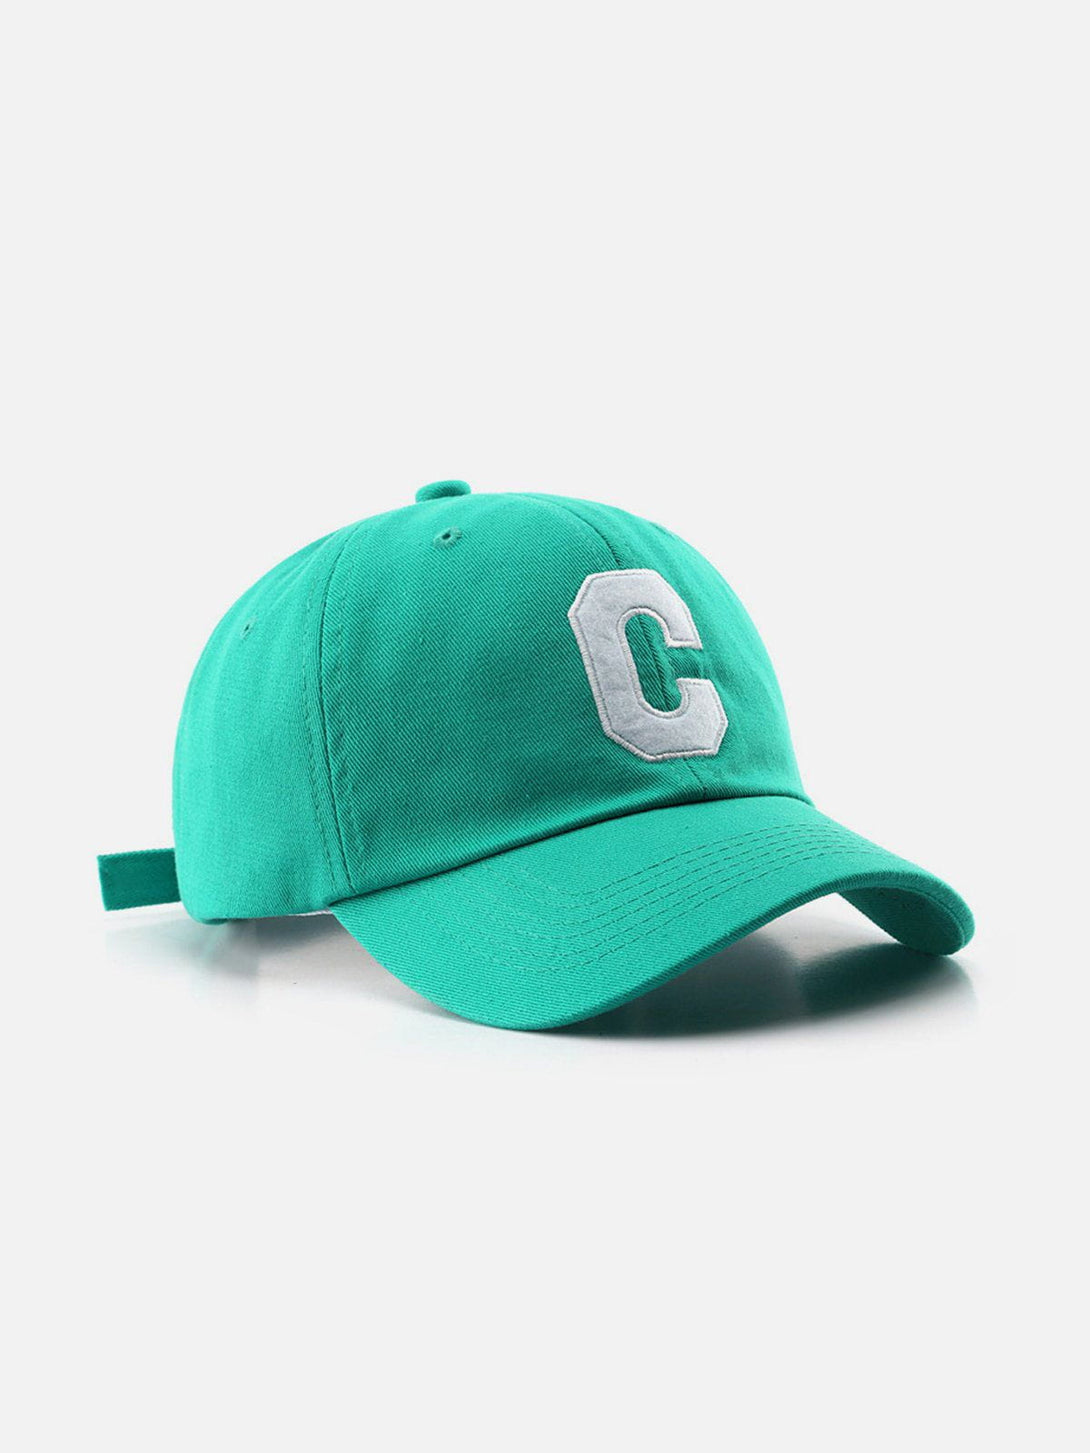 Majesda® - Vintage Letter "C" Baseball Cap- Outfit Ideas - Streetwear Fashion - majesda.com